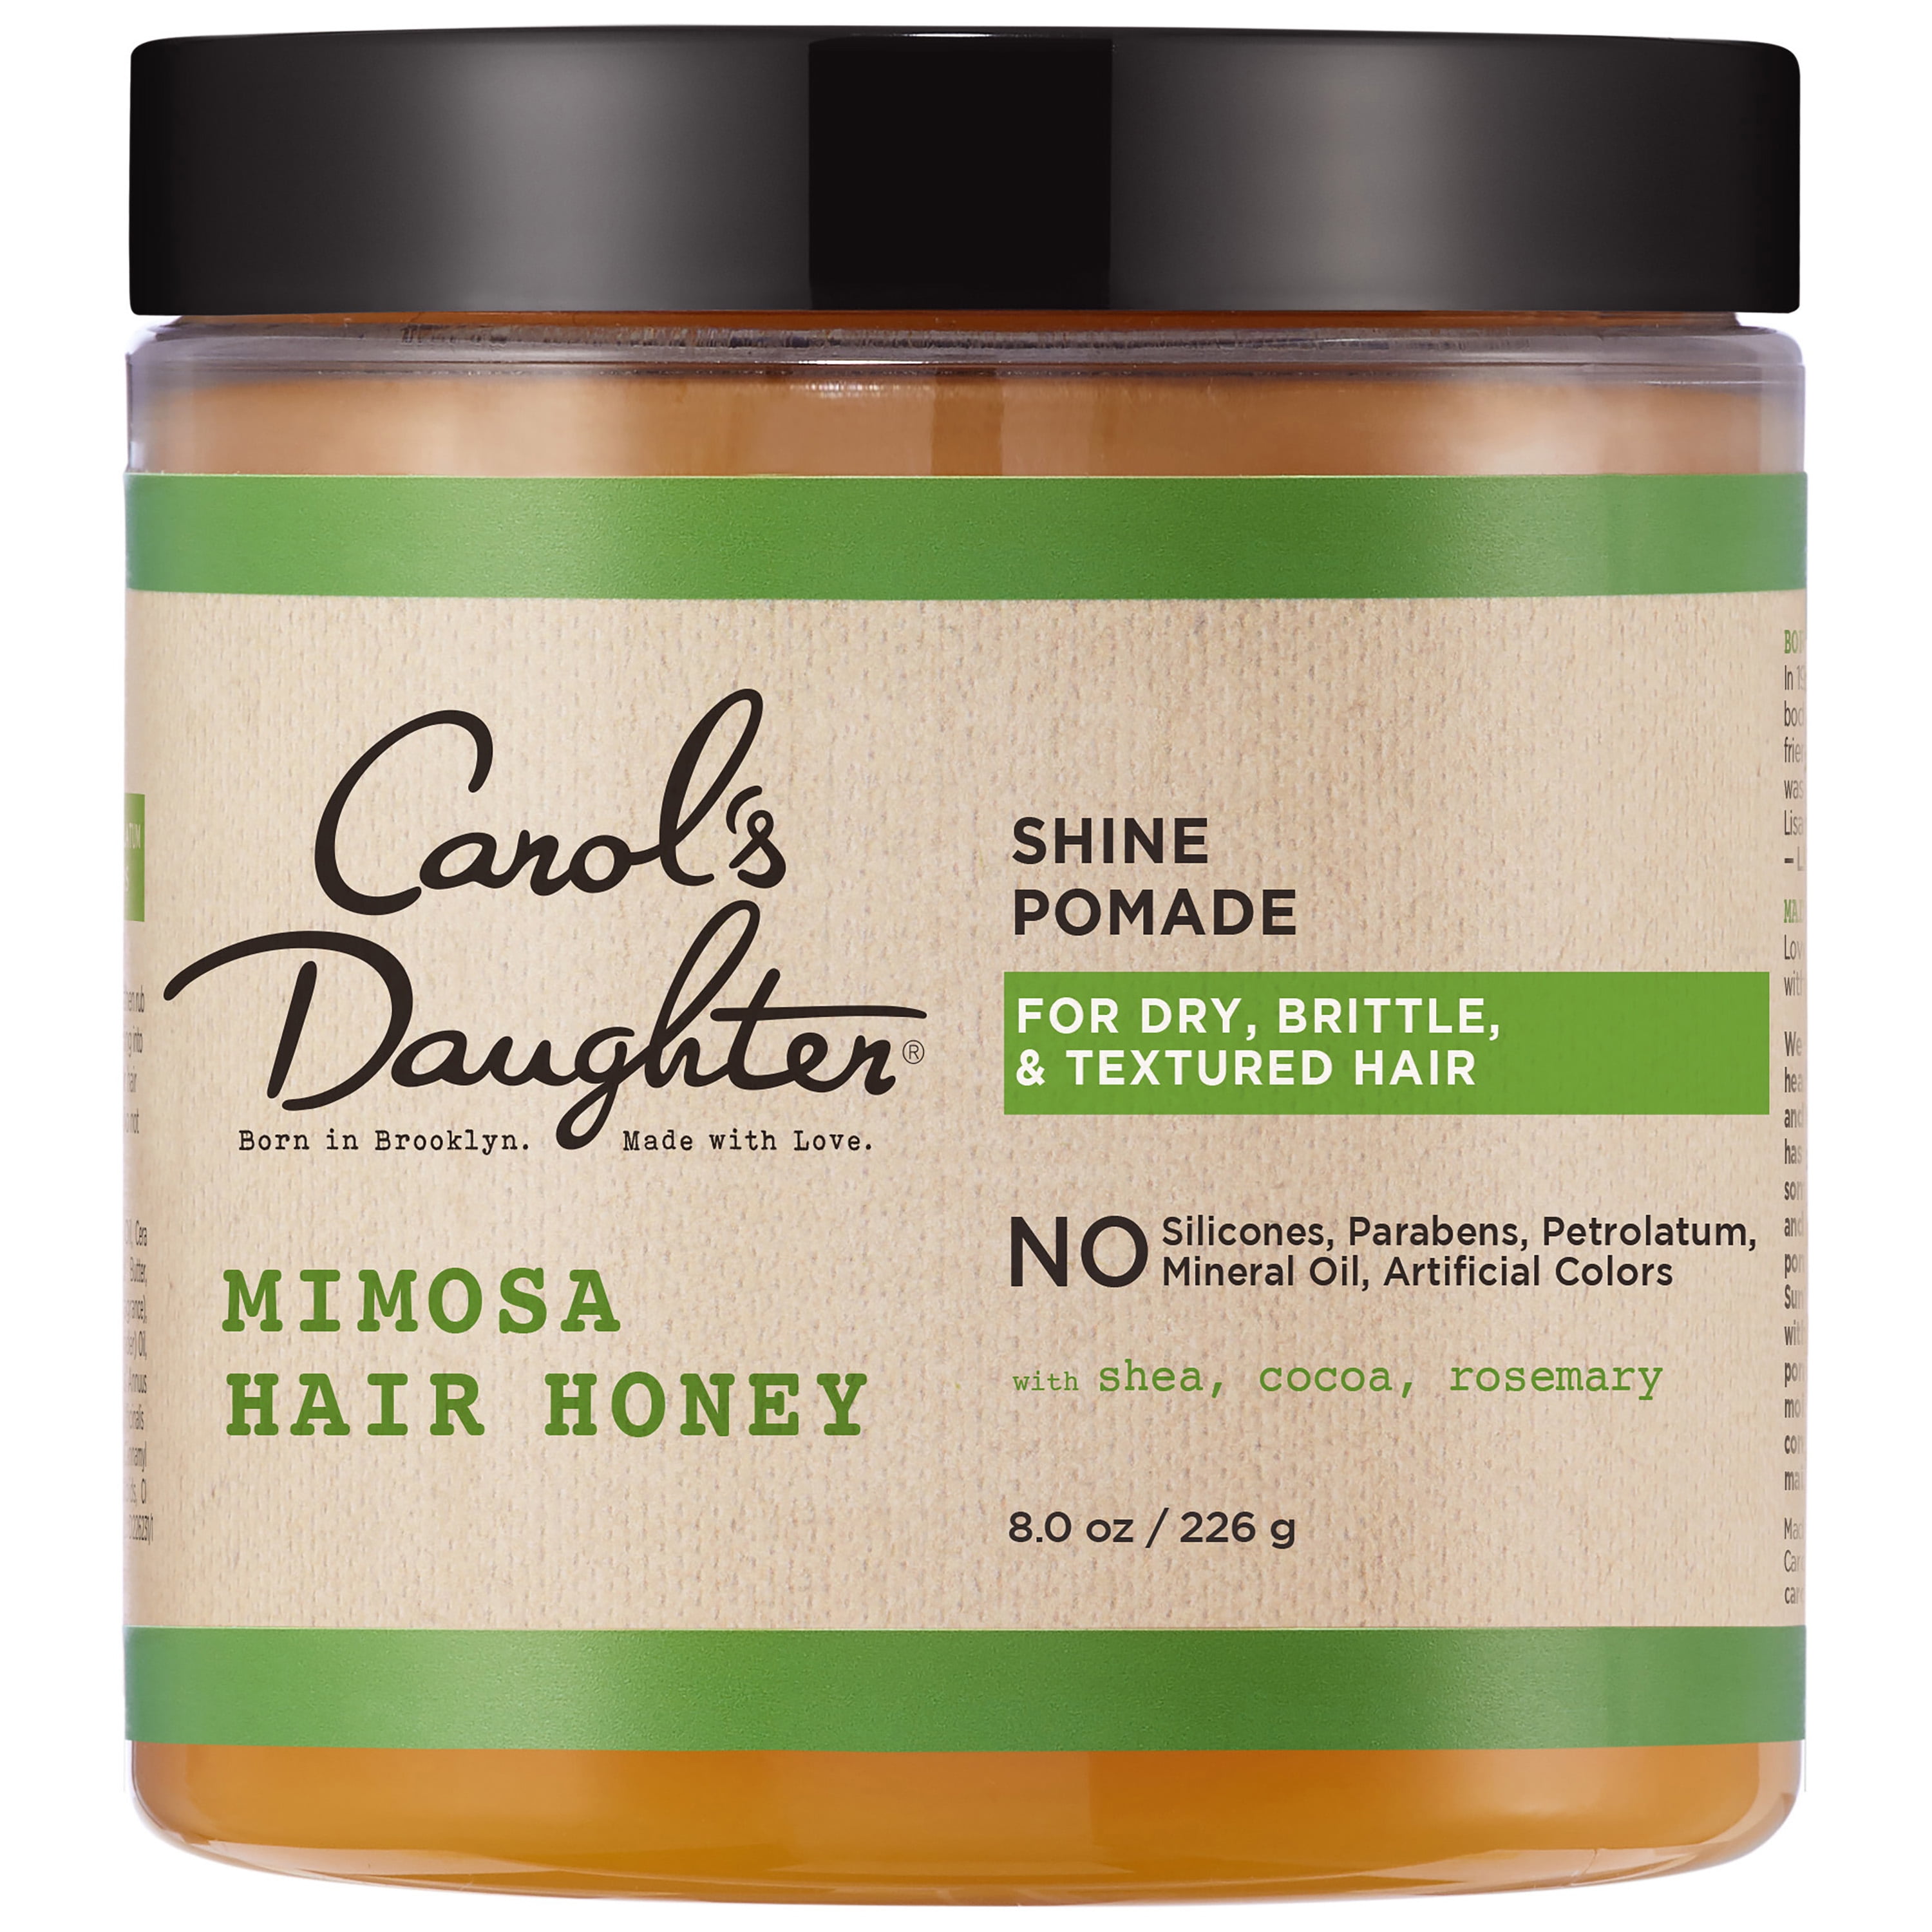 Carol's Daughter Mimosa Hair Honey Moisturizing nourishing Shine Enhancing Hair Pomade, 8 oz